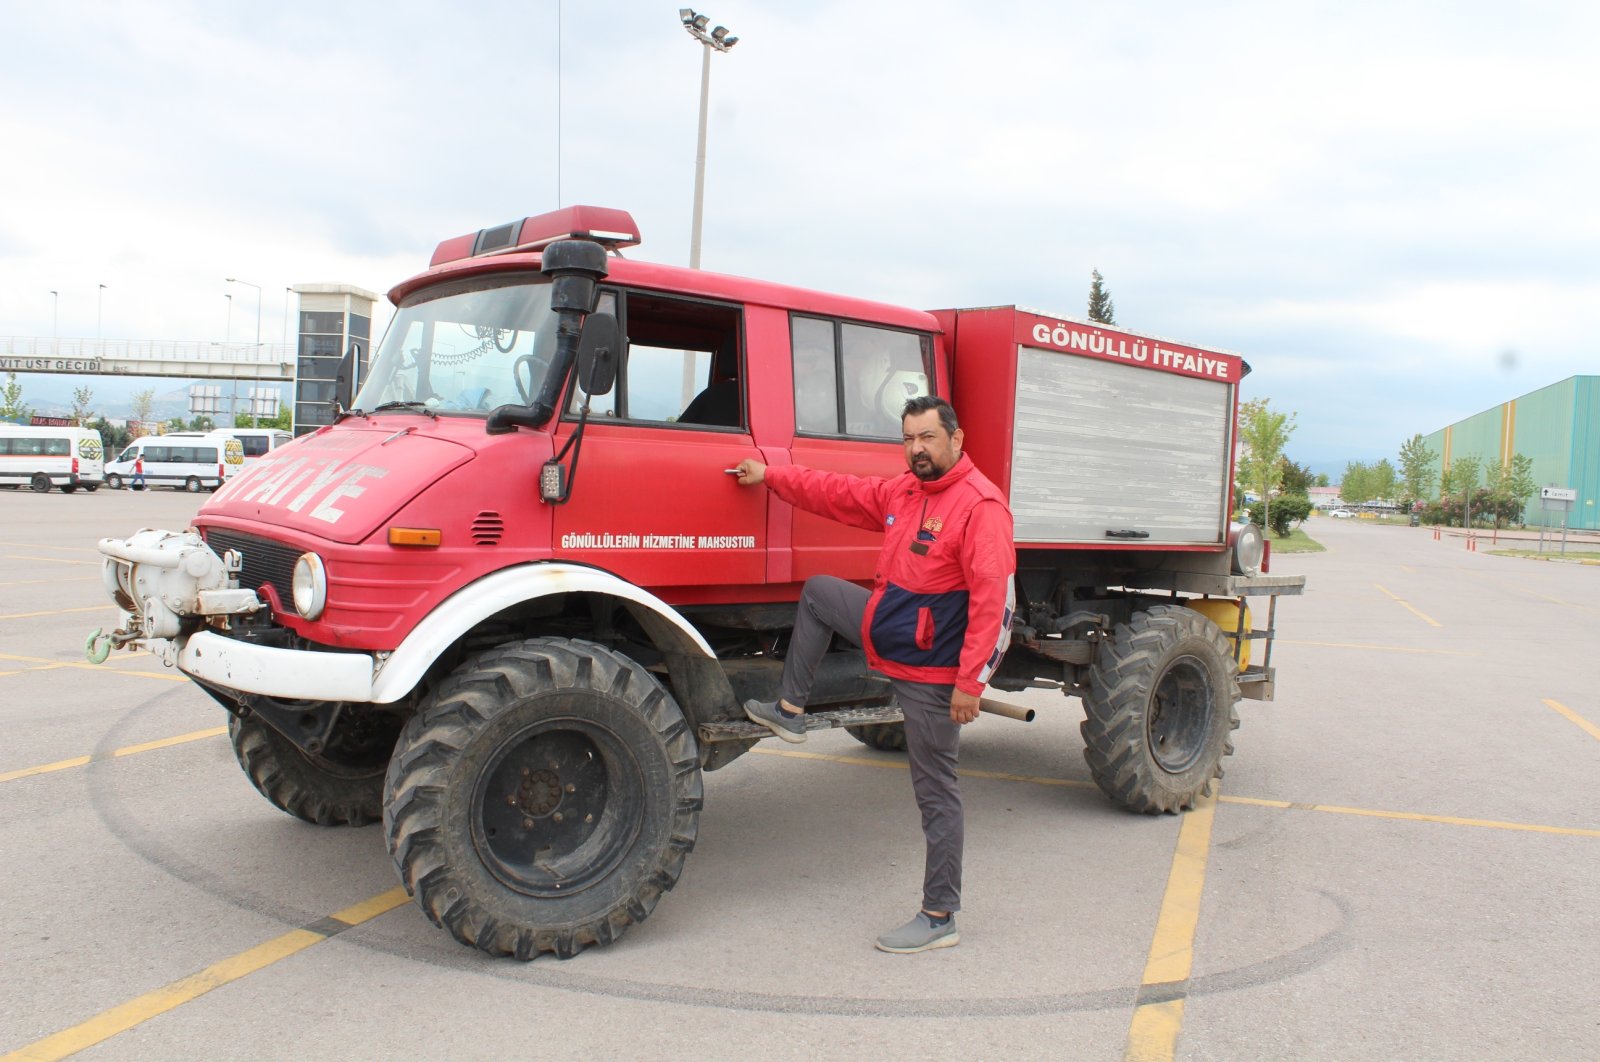 Umut Öcal poses next to his fire truck in Kocaeli, northwestern Turkey, June 7, 2022. (DHA PHOTO)